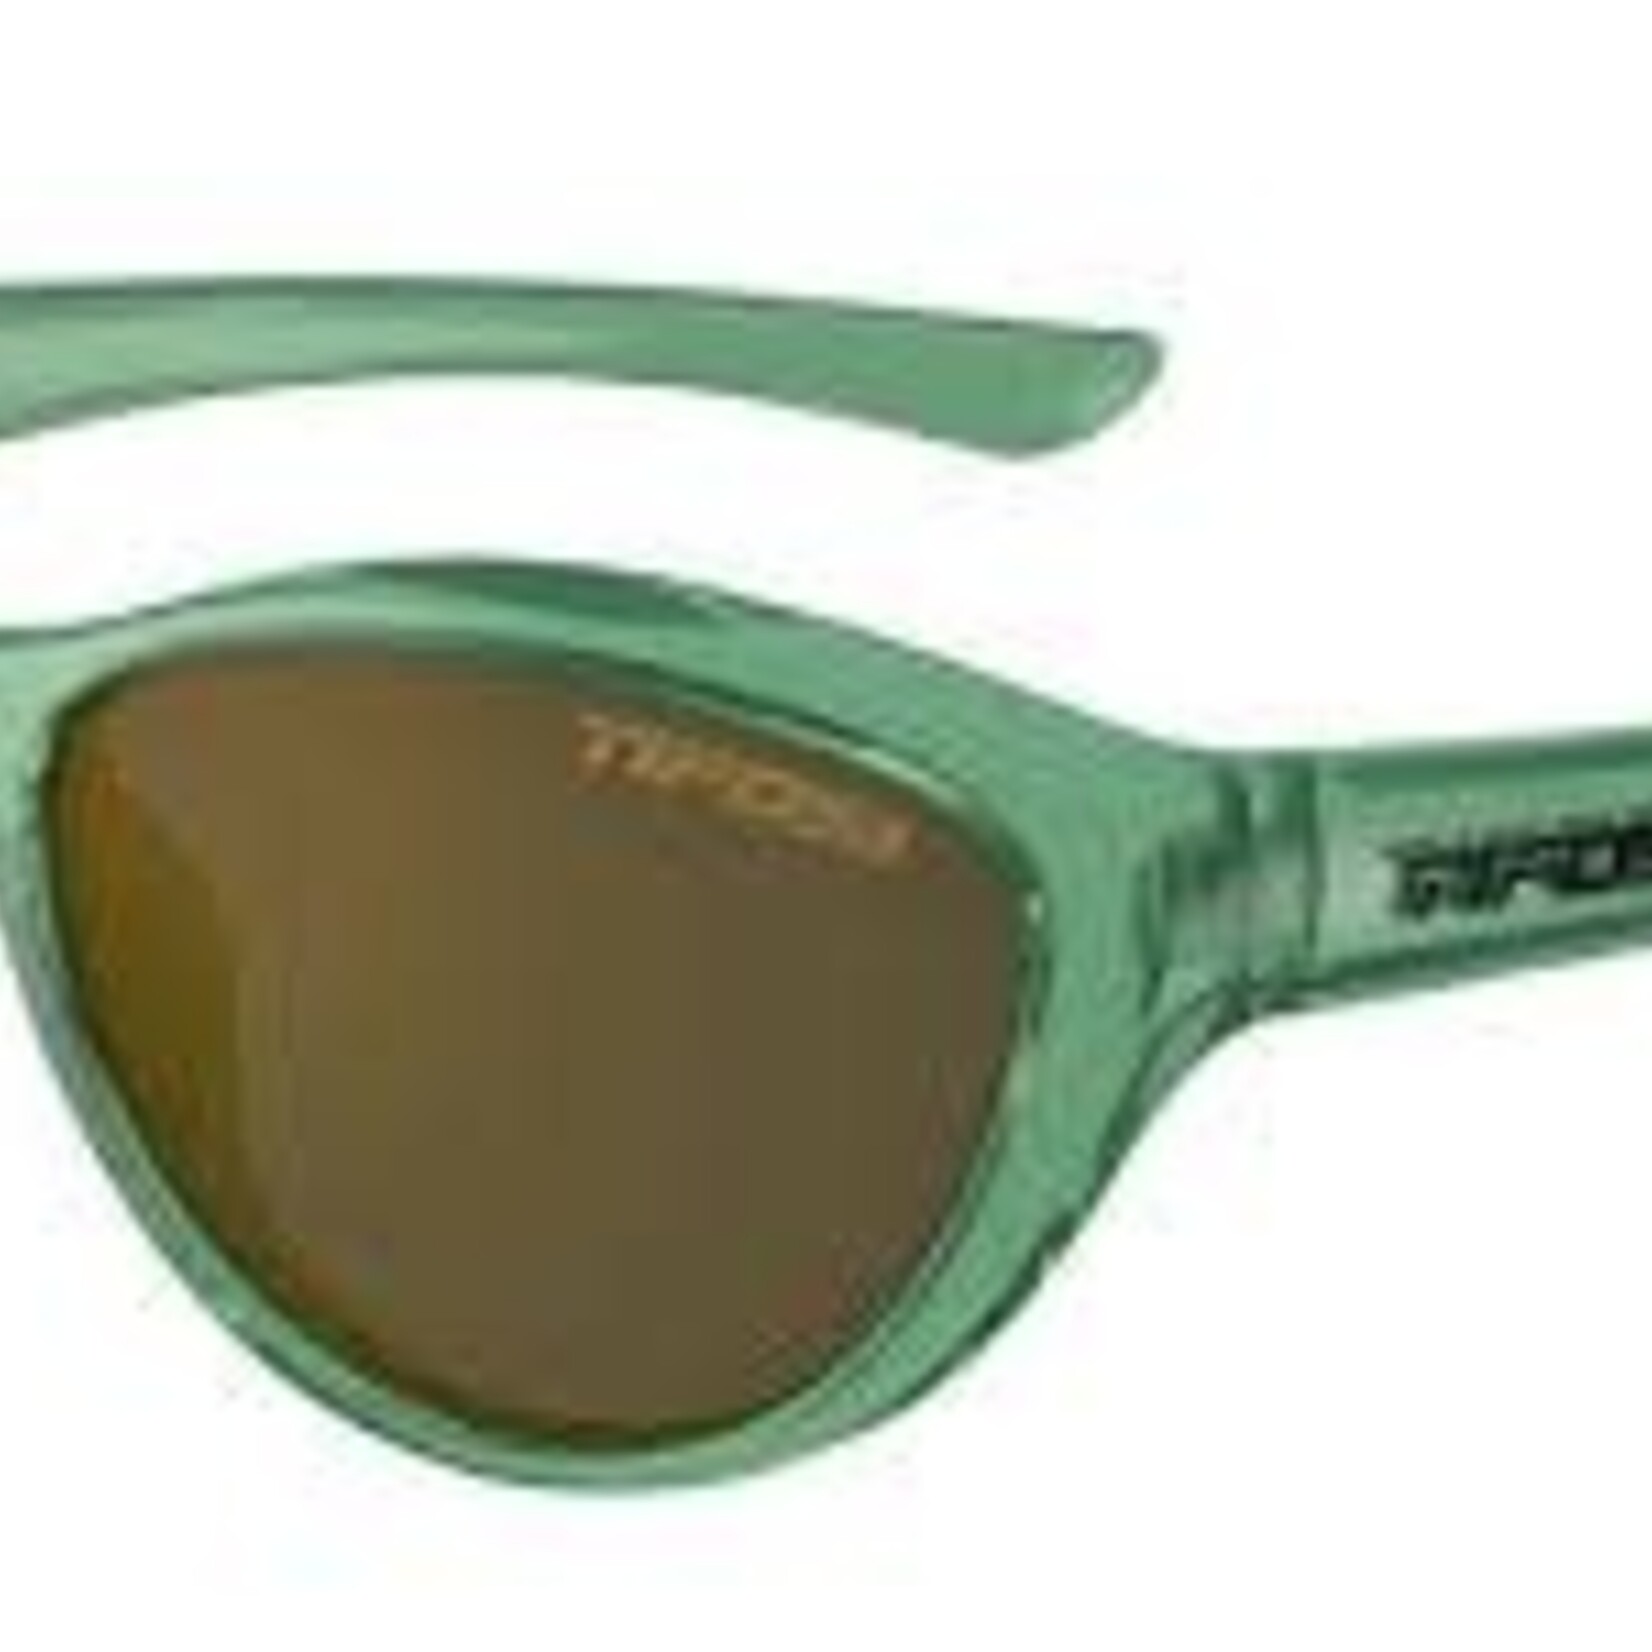 Tifosi Optics Sunglasses Tifosi Shirley Crystal Olive